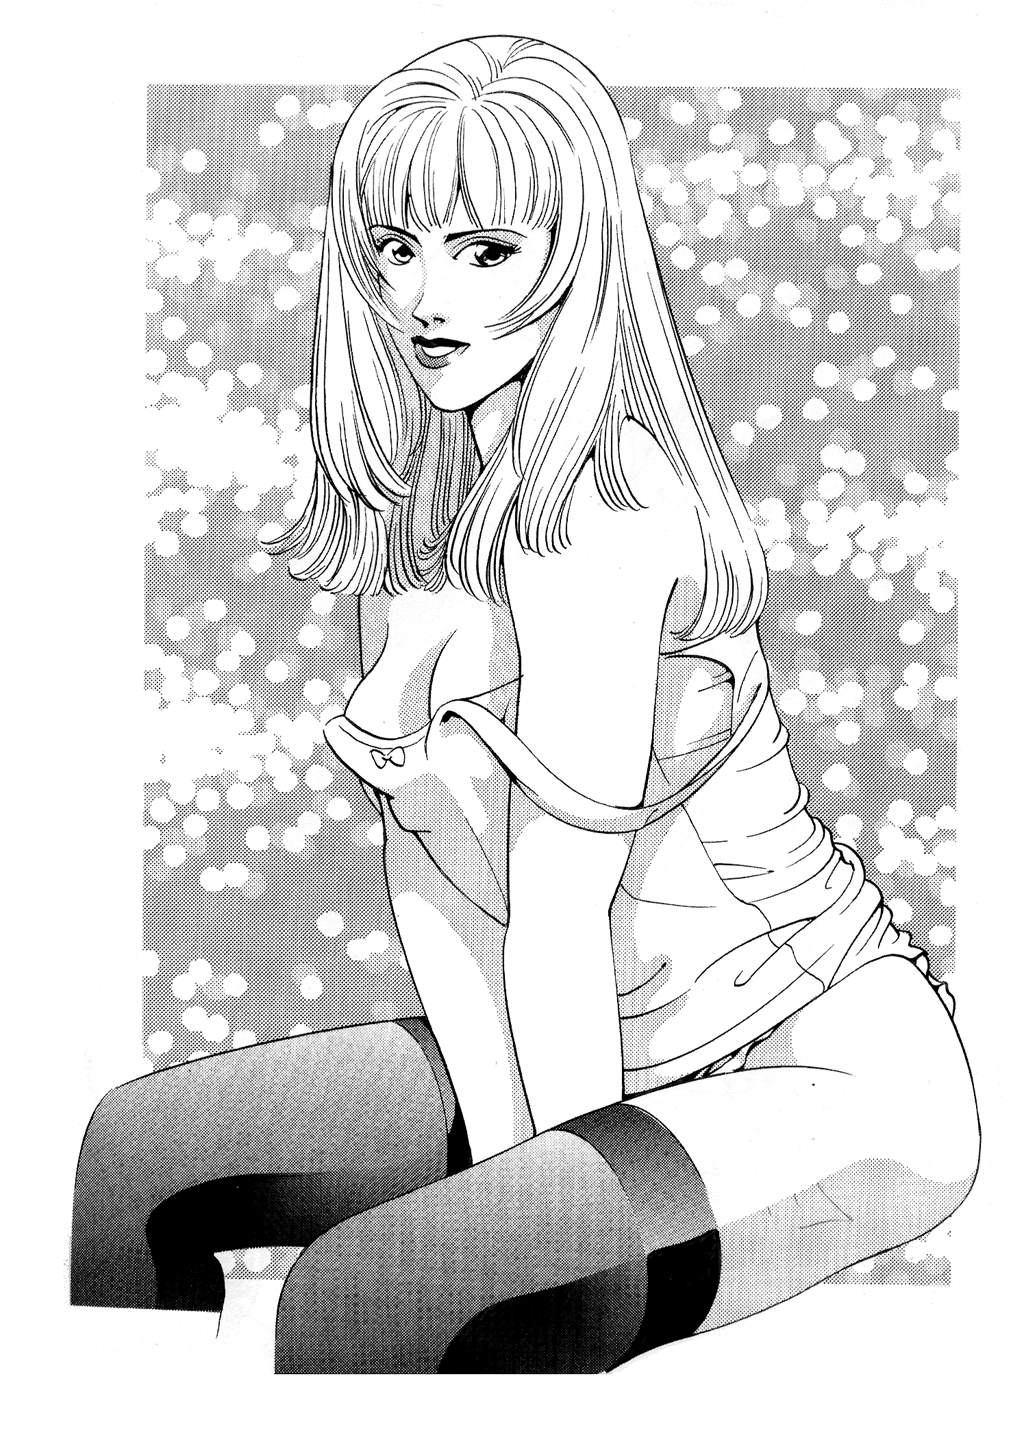 Le dessin du Manga 04 - Personnages feminin, Attitudes, Expressions numero d'image 115